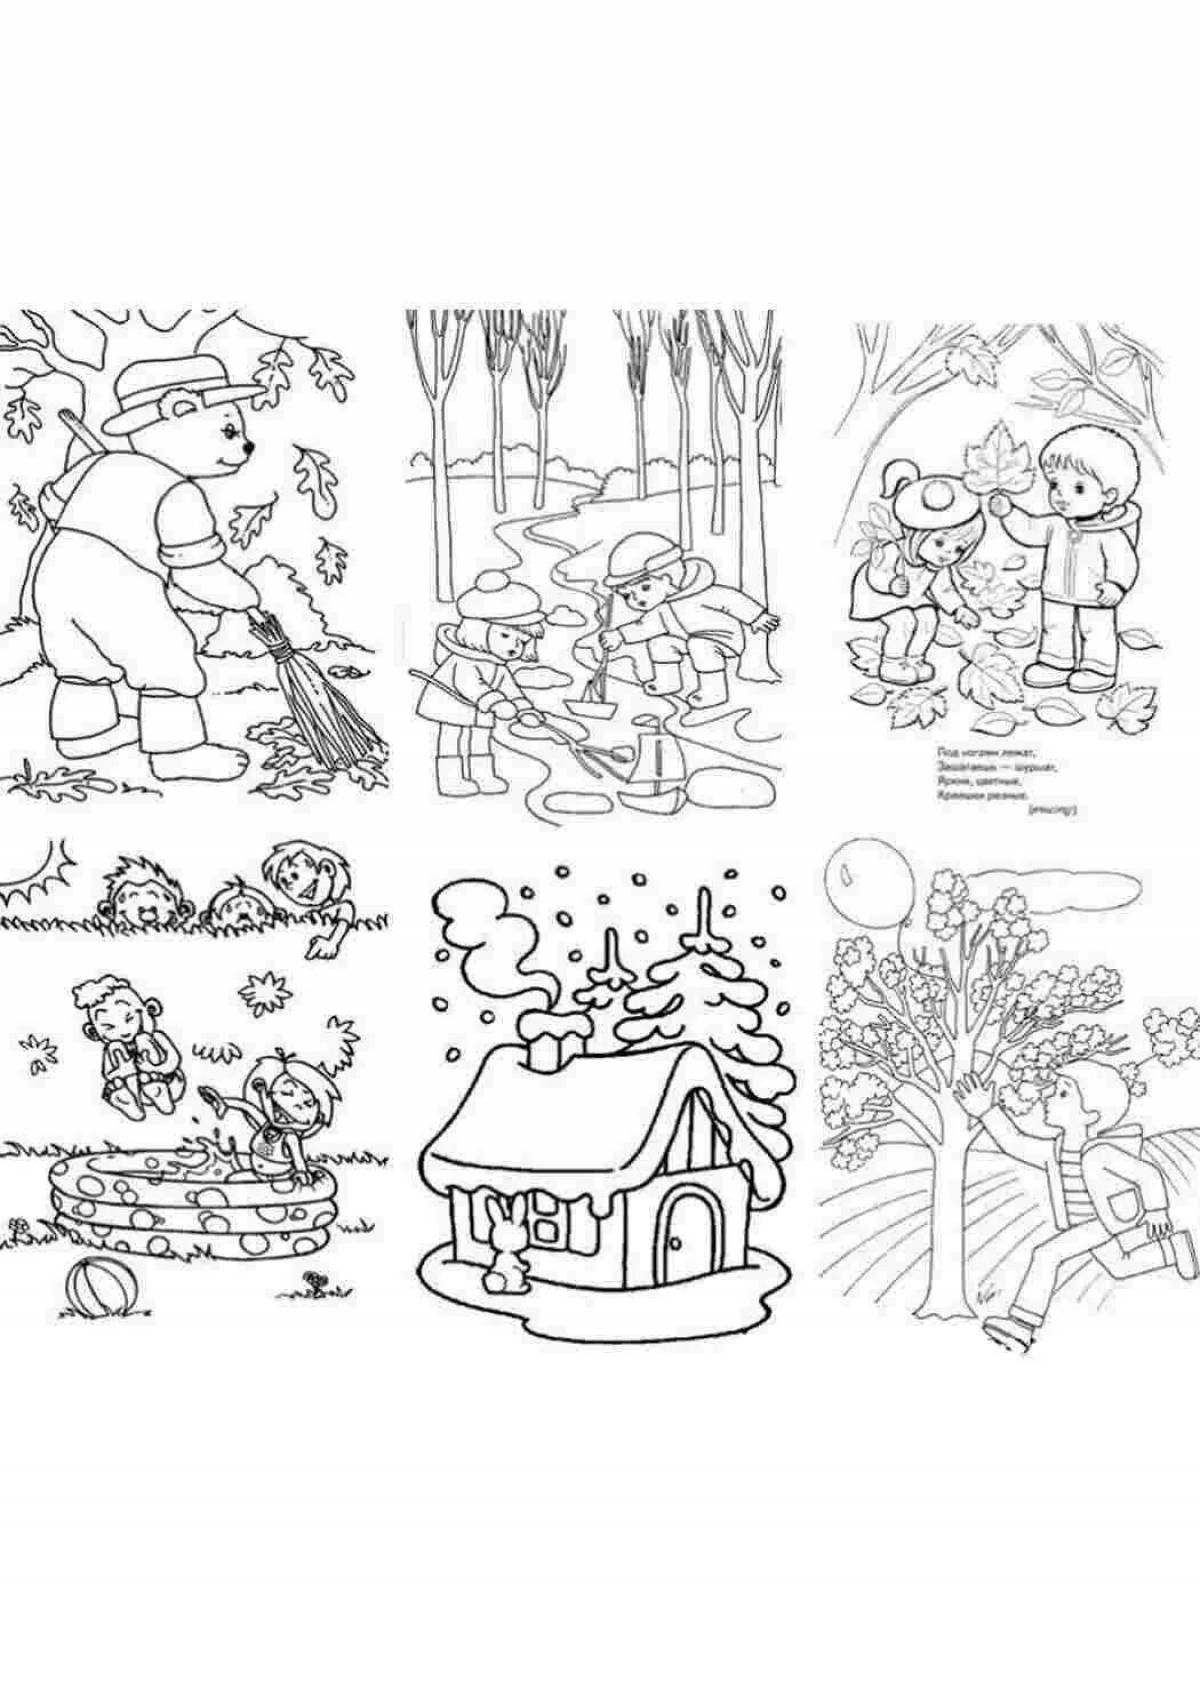 Happy summer coloring page